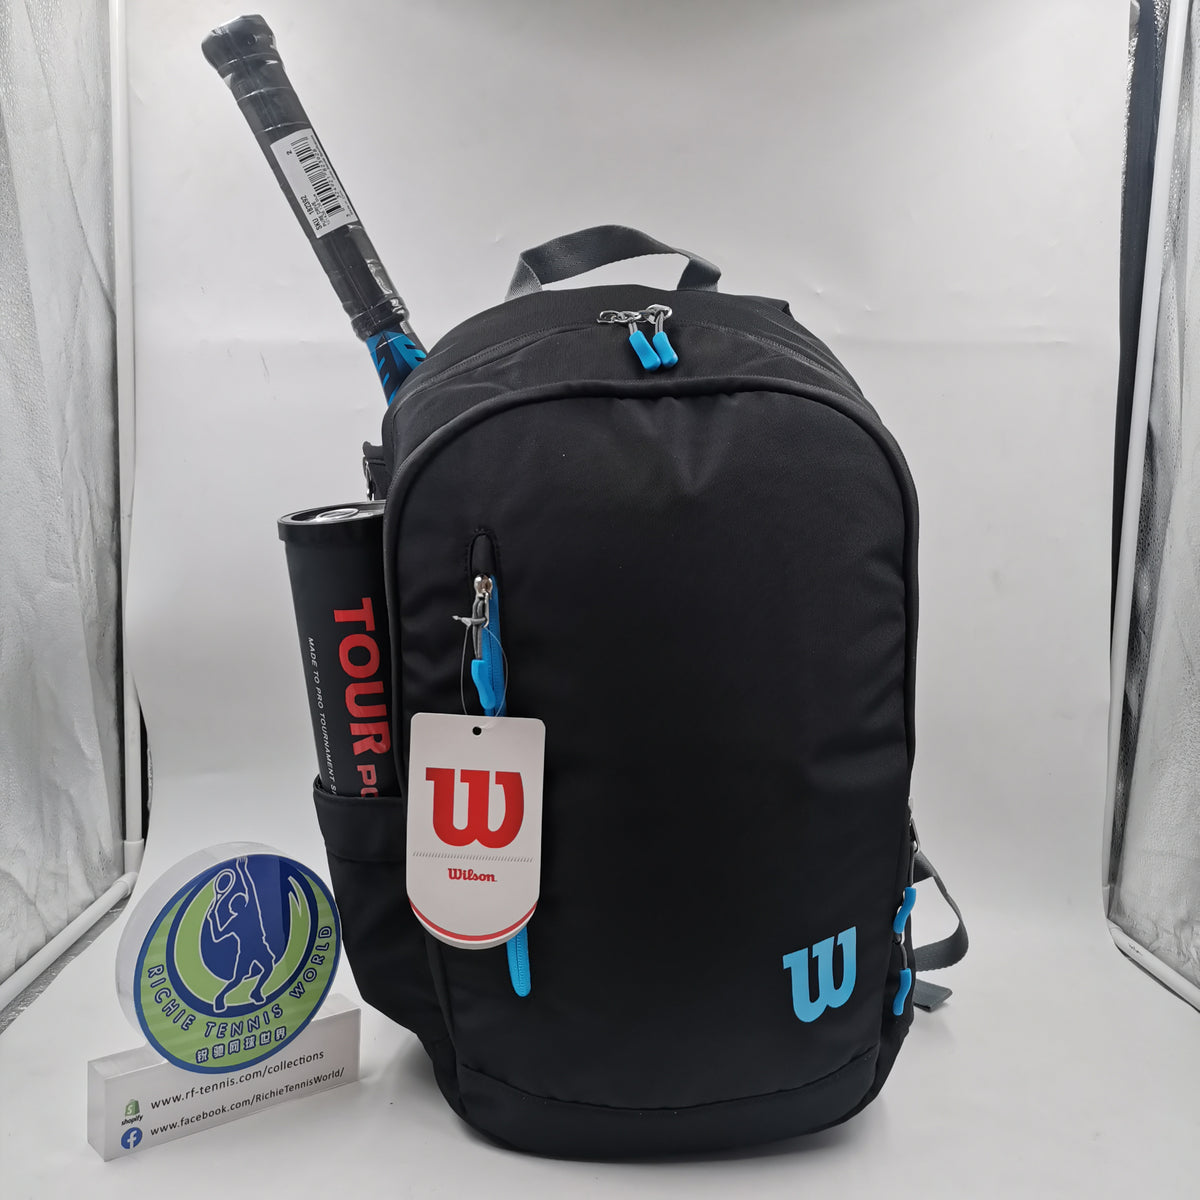 Wilson Ultra Backpack Racquet Bag (Black/Blue/Silver), 56% OFF